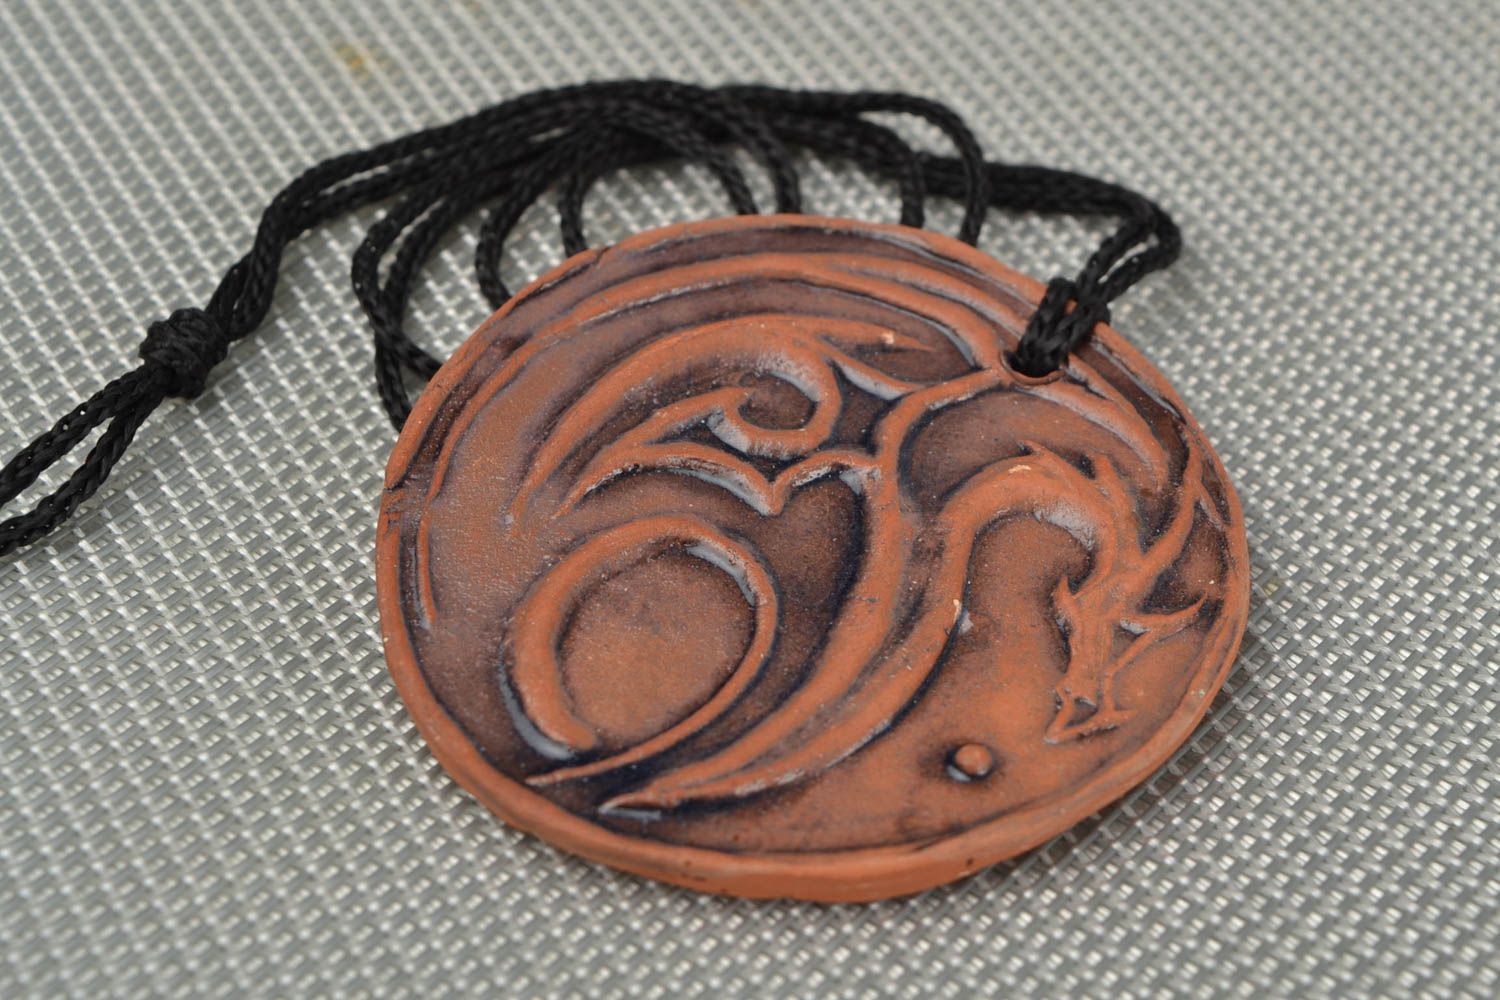 Handmade large brown ceramic round pendant with dragon image photo 1